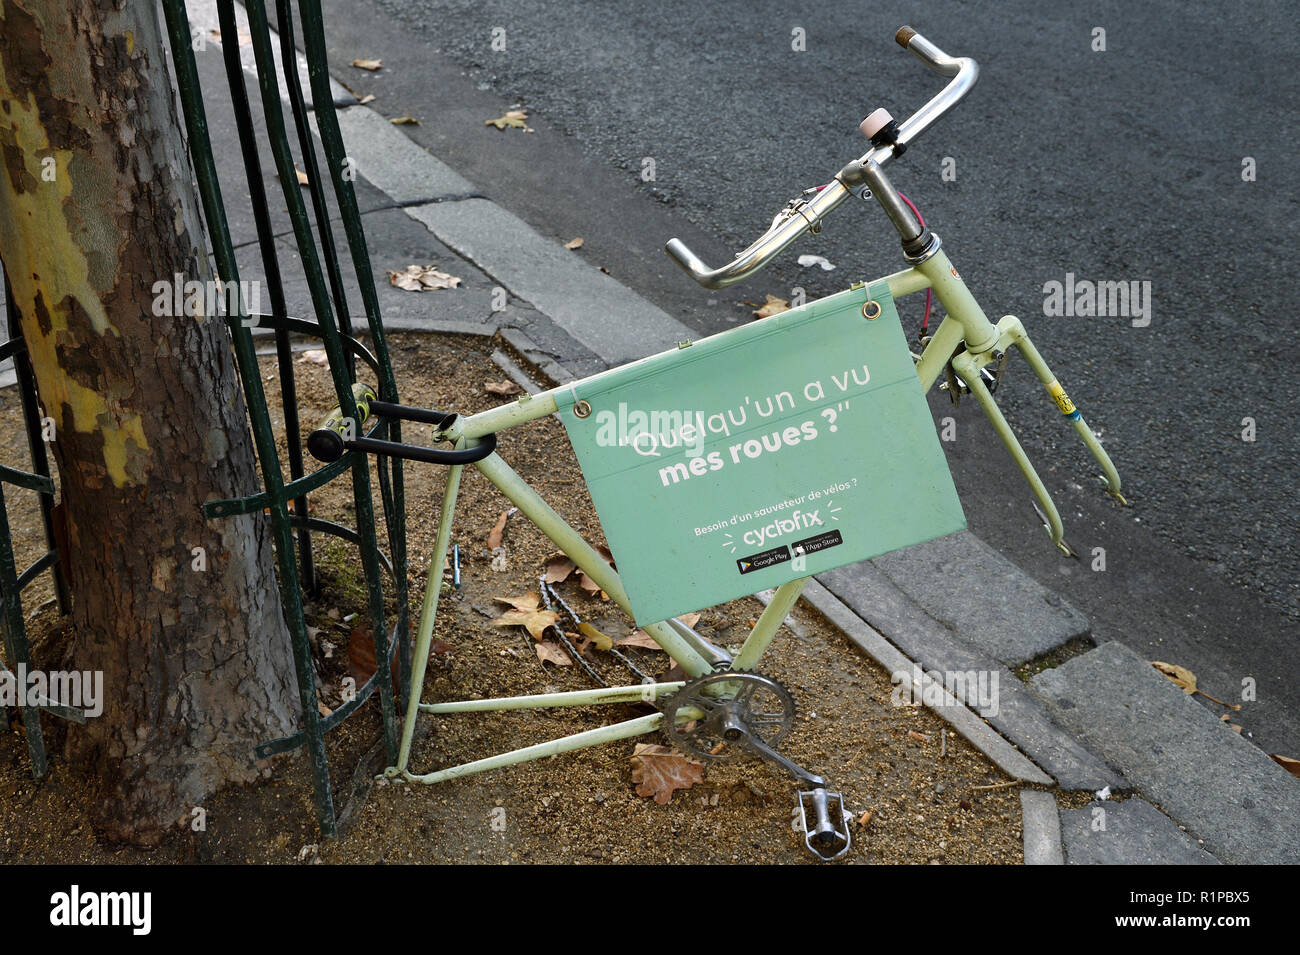 No wheels bicycle - Montparnasse - Paris - France Stock Photo